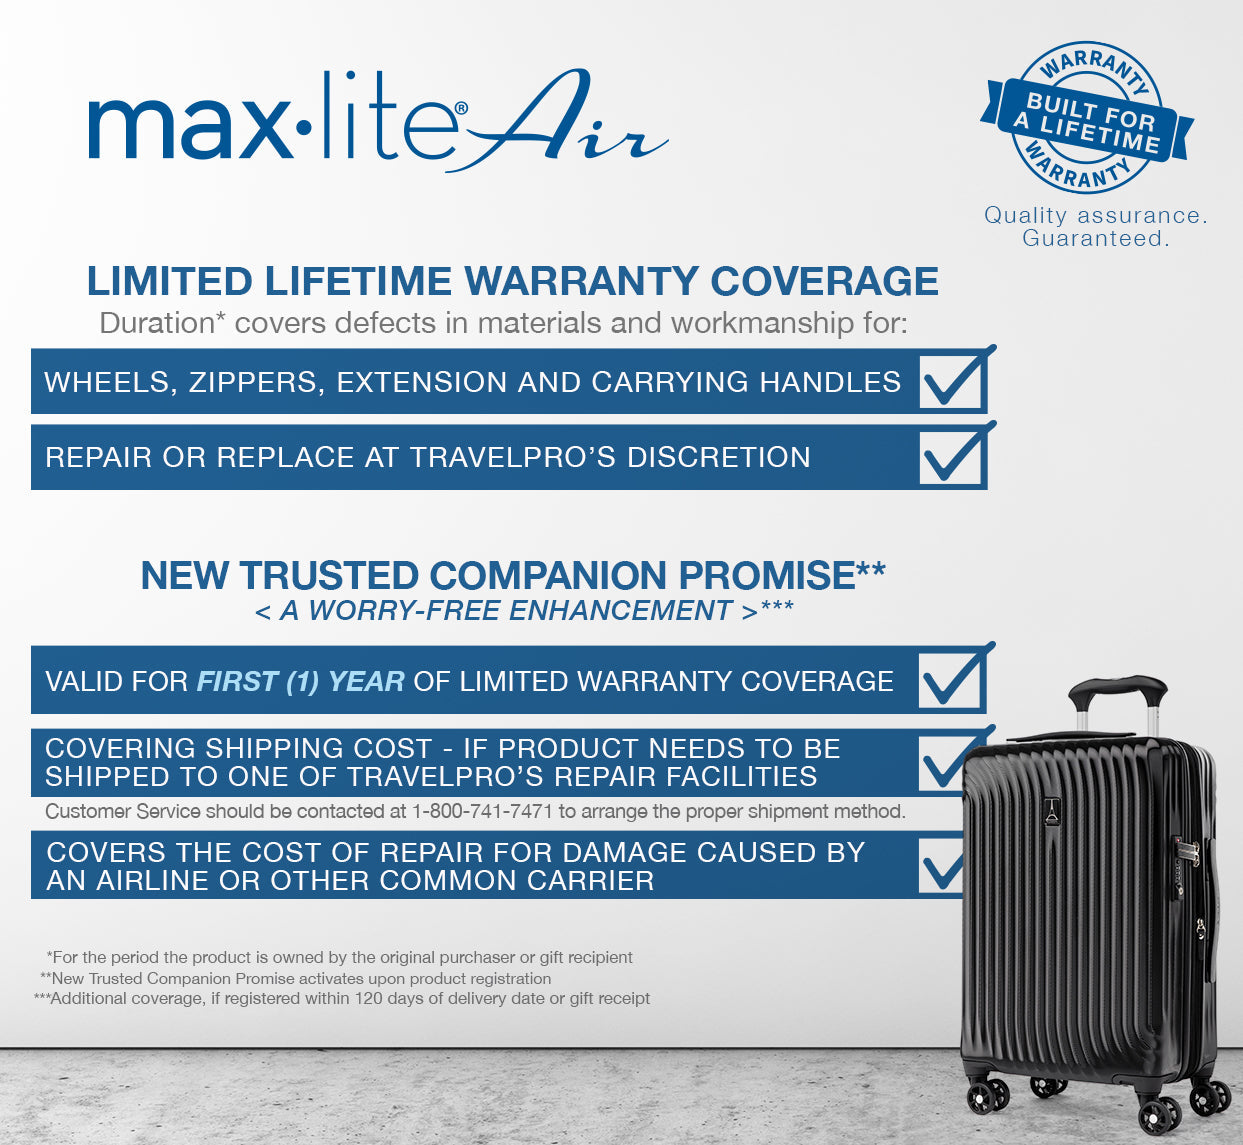 Max lite lifetime warranty